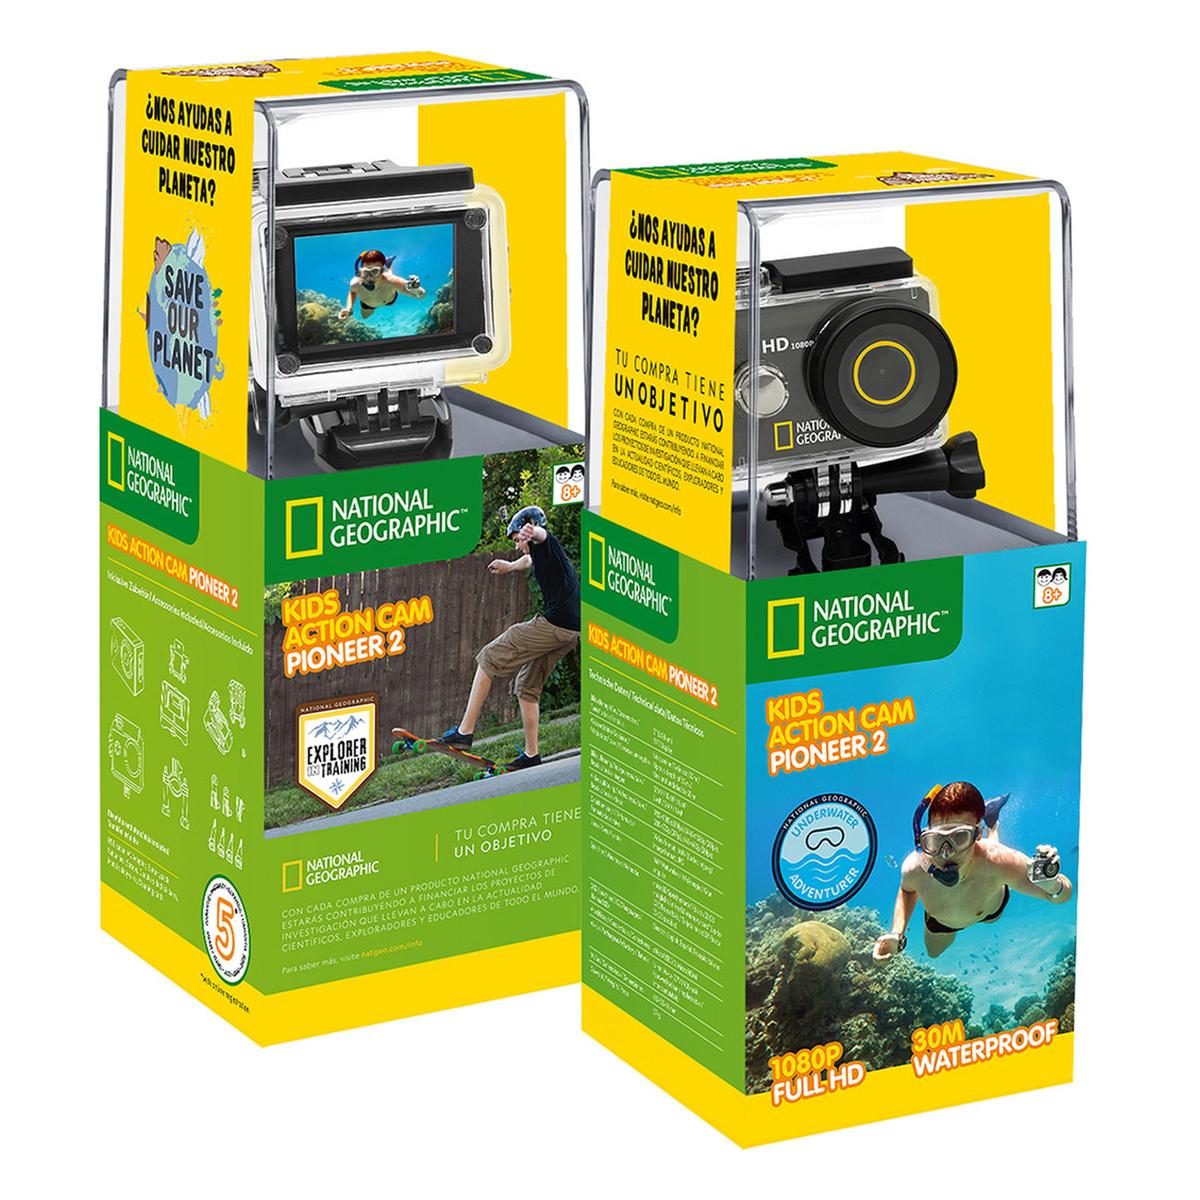 National Geographic - Kids Action Cam Pioneer 2 | Jugamos en verde |  Toys"R"Us España